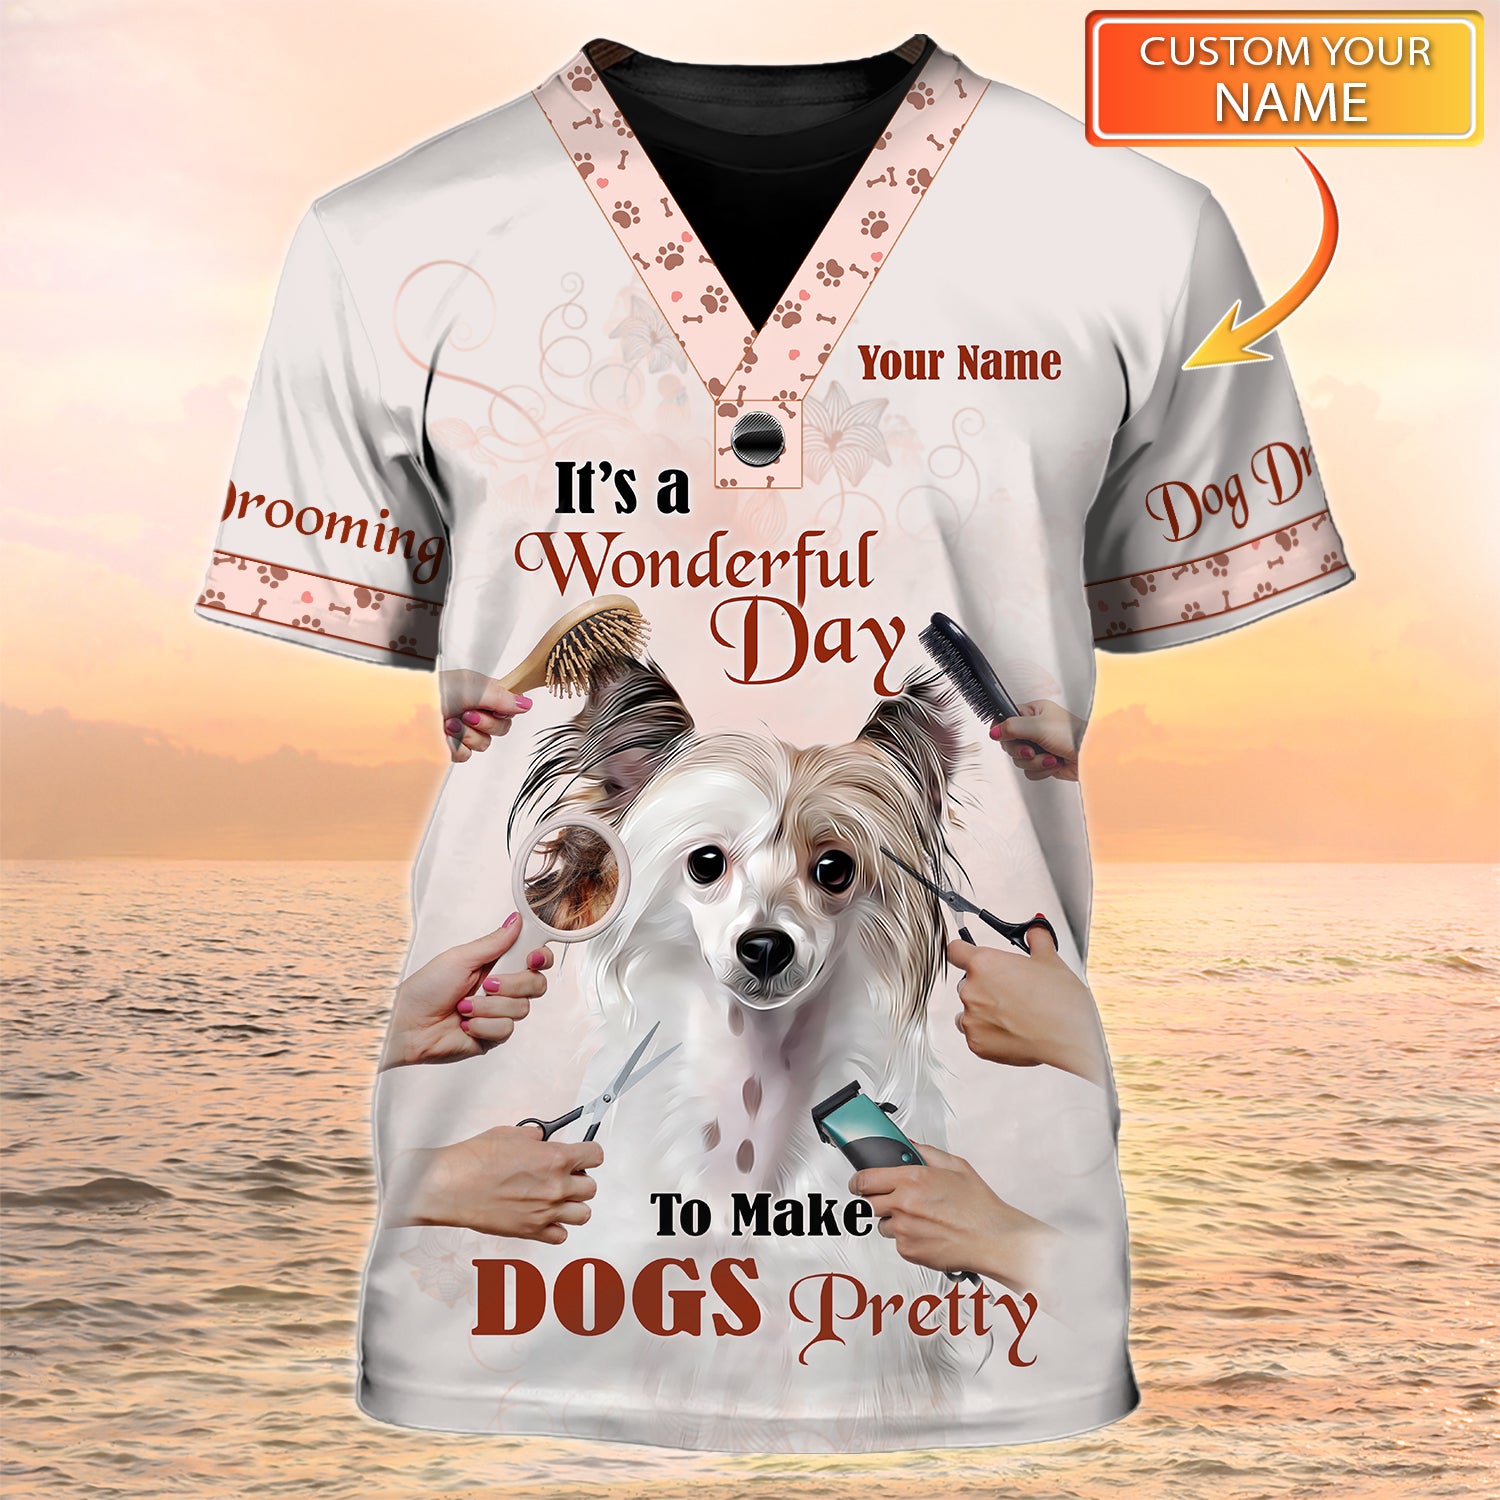 Dog Grooming Personalized Name 3D Tshirt 02 Pet Groomer Uniform Nbtt